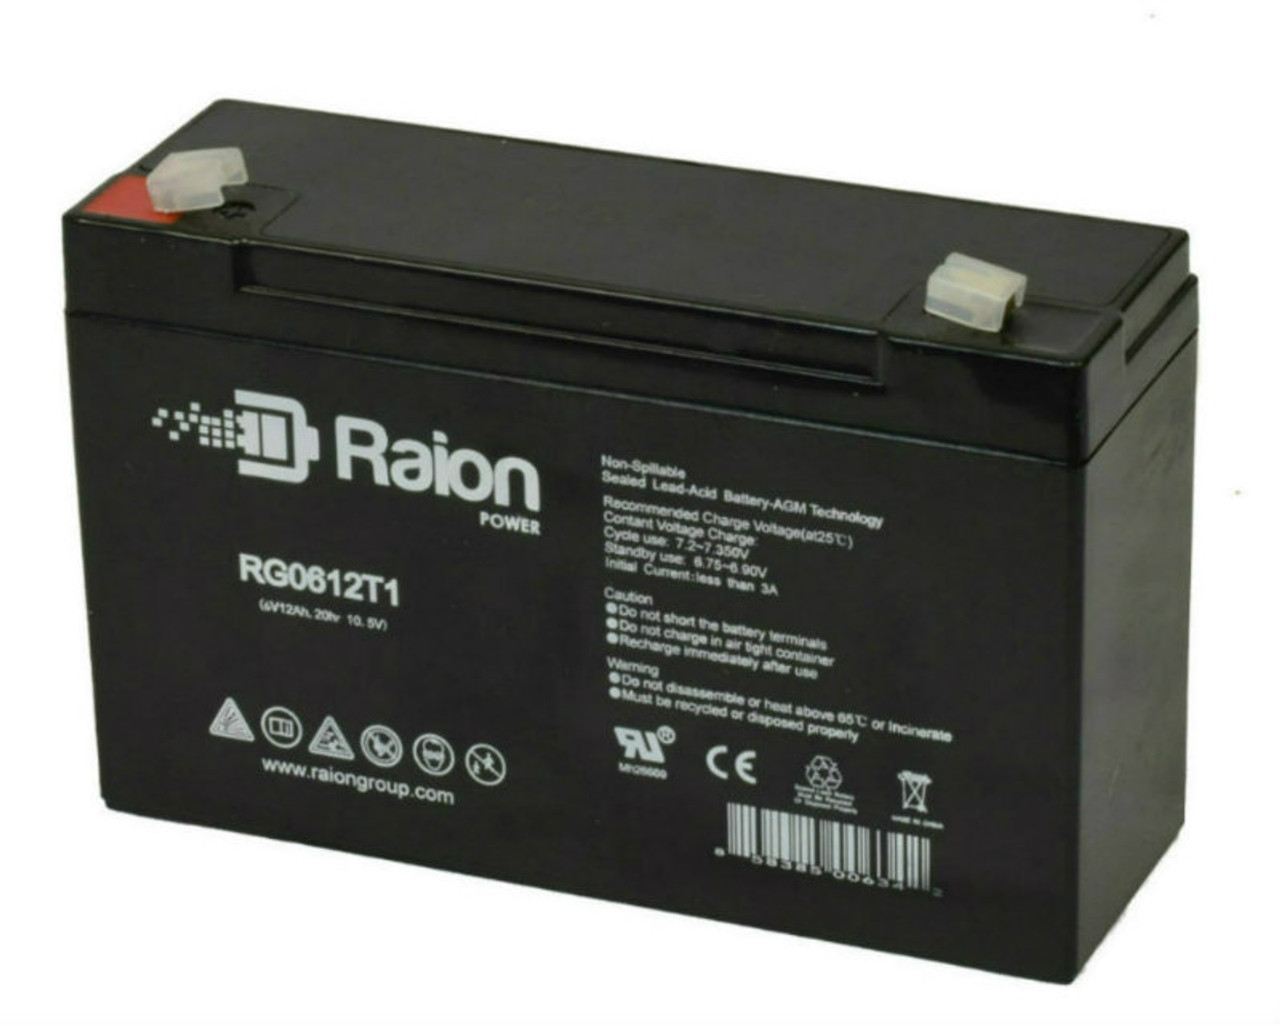 Raion Power RG06120T1 Replacement 6V 12Ah Emergency Light Battery for Sonnenschein 101581409A